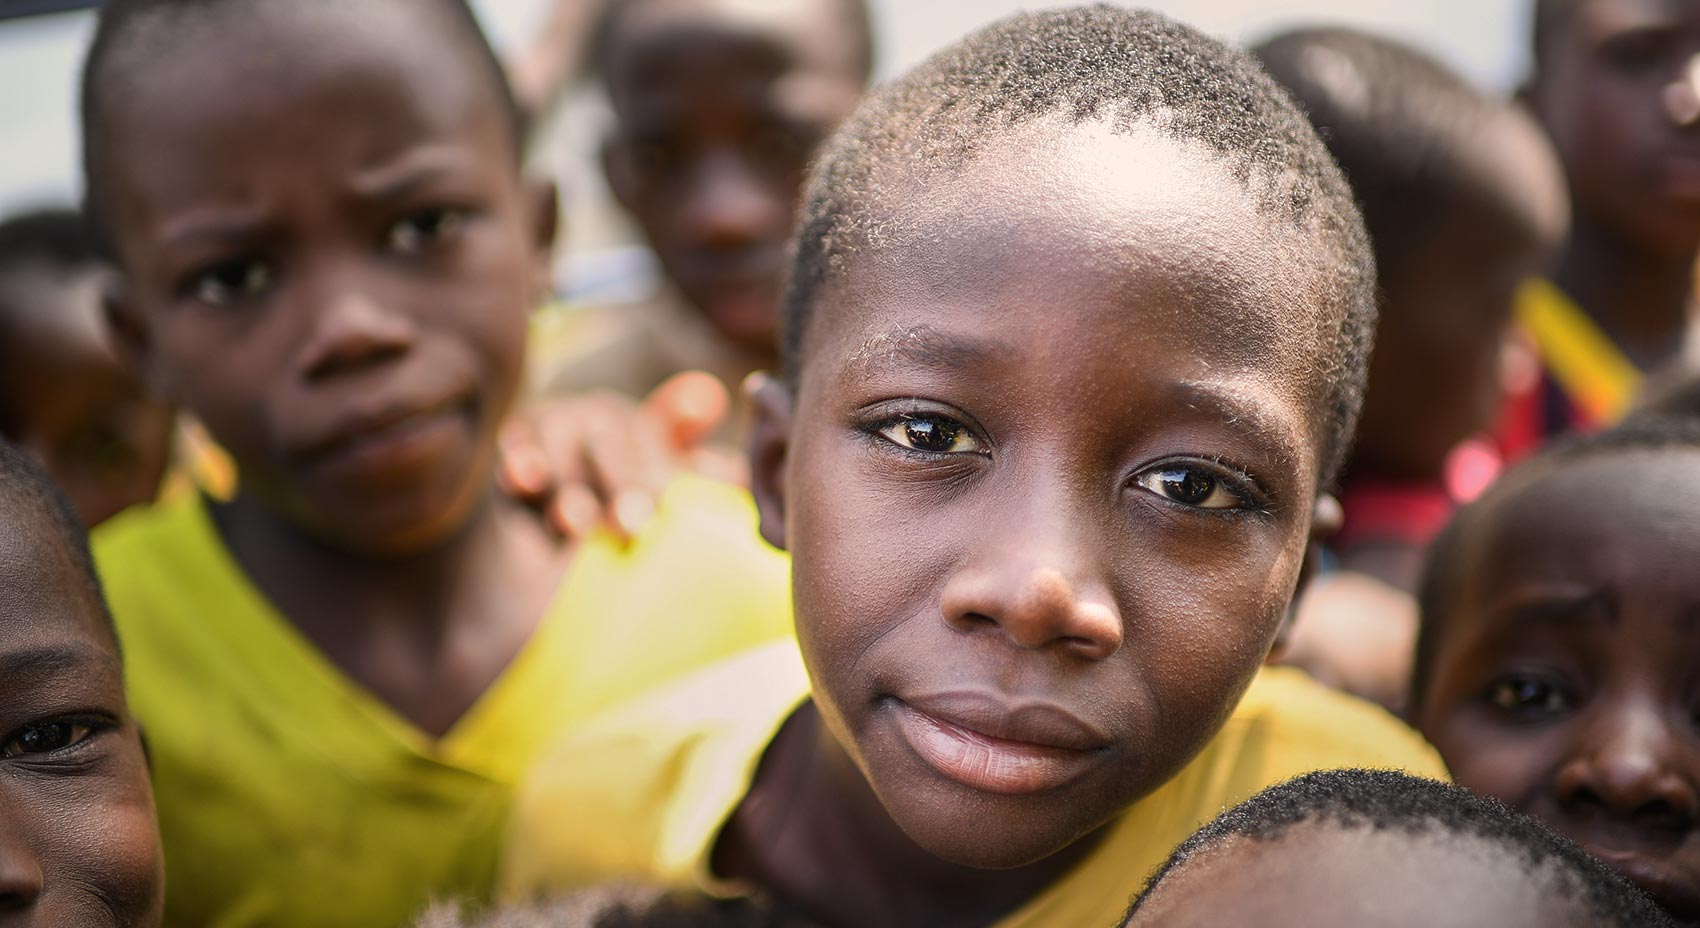 A boy in Burkina Faso. Credit: Gavi/2018/Tony Noel.